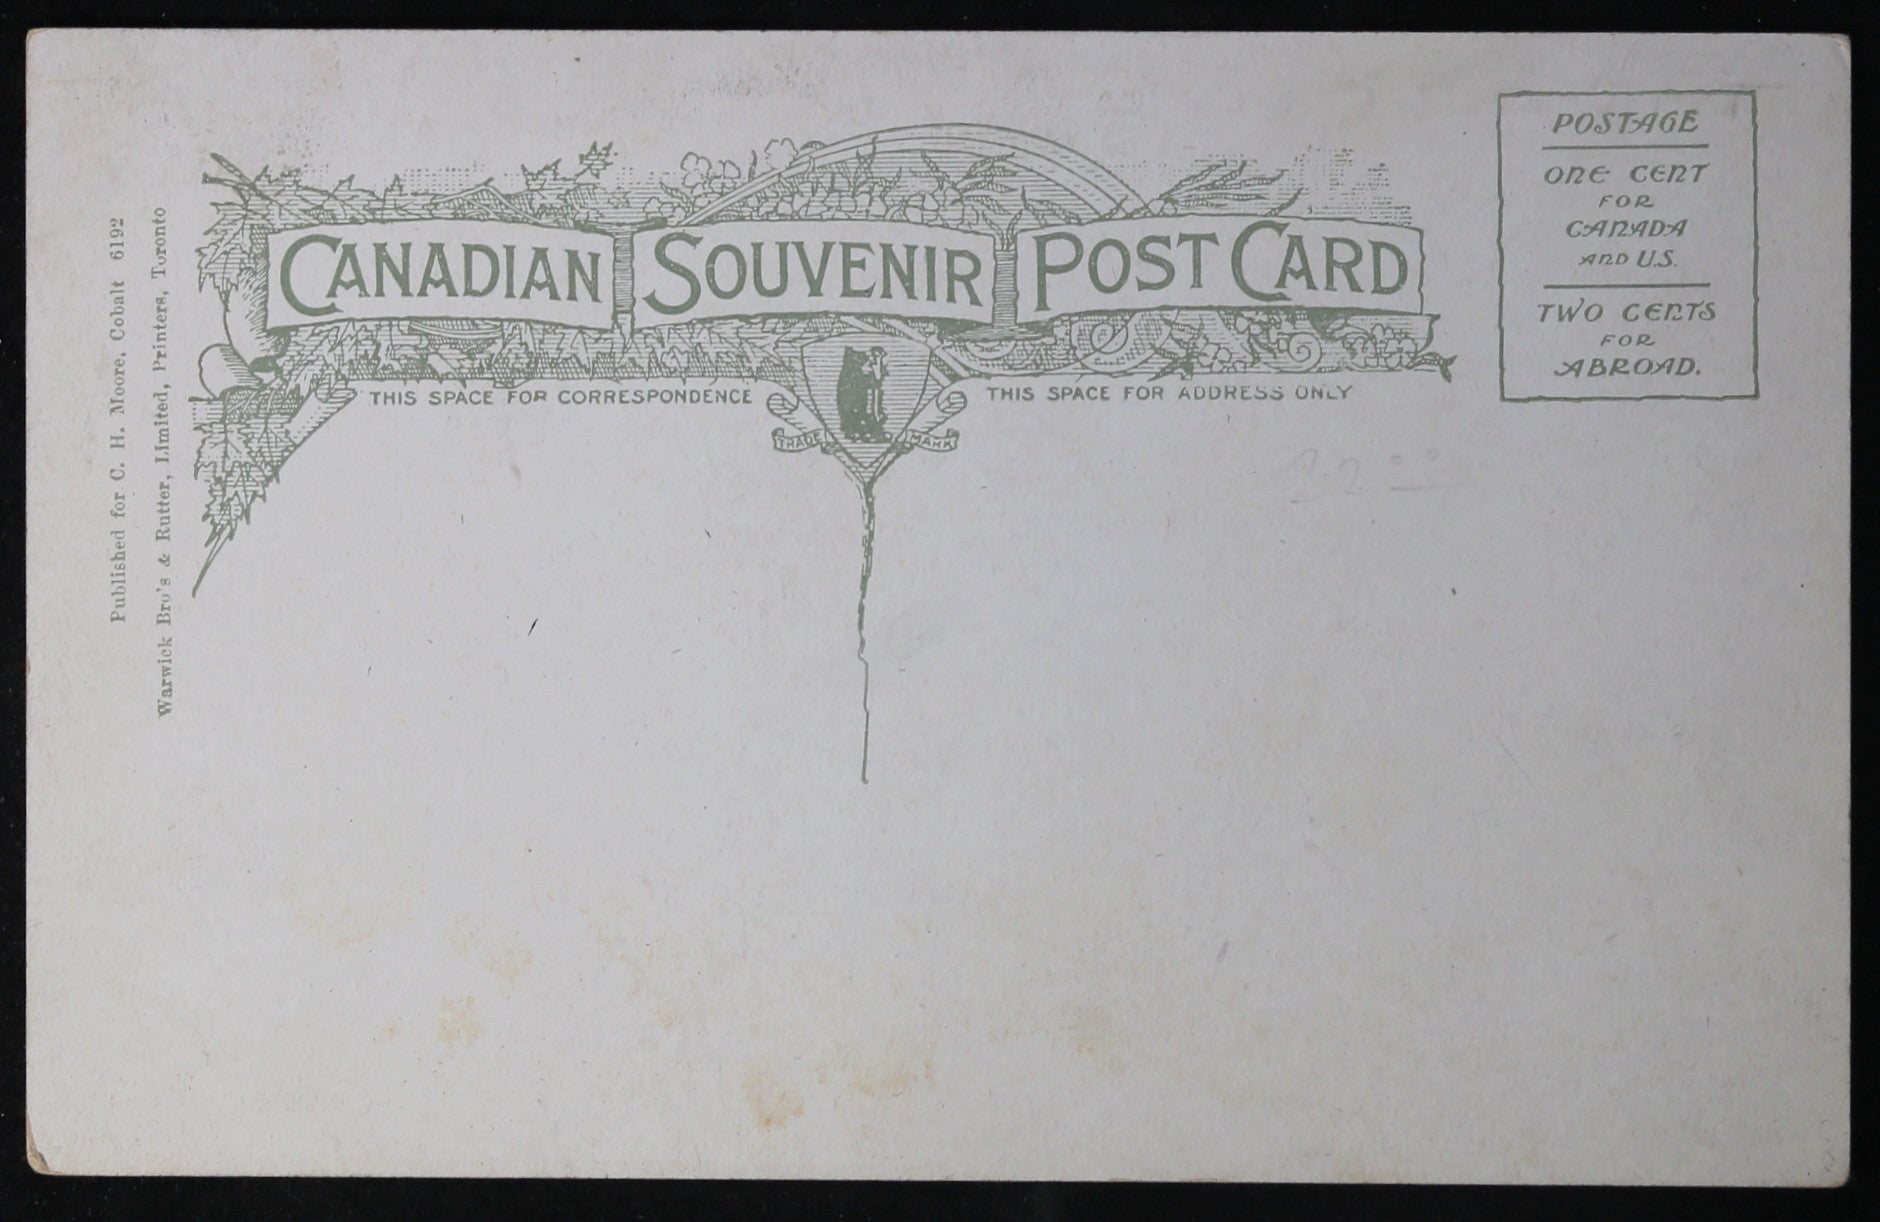 @1910 postcard Buffalo Mine Cobalt Canada